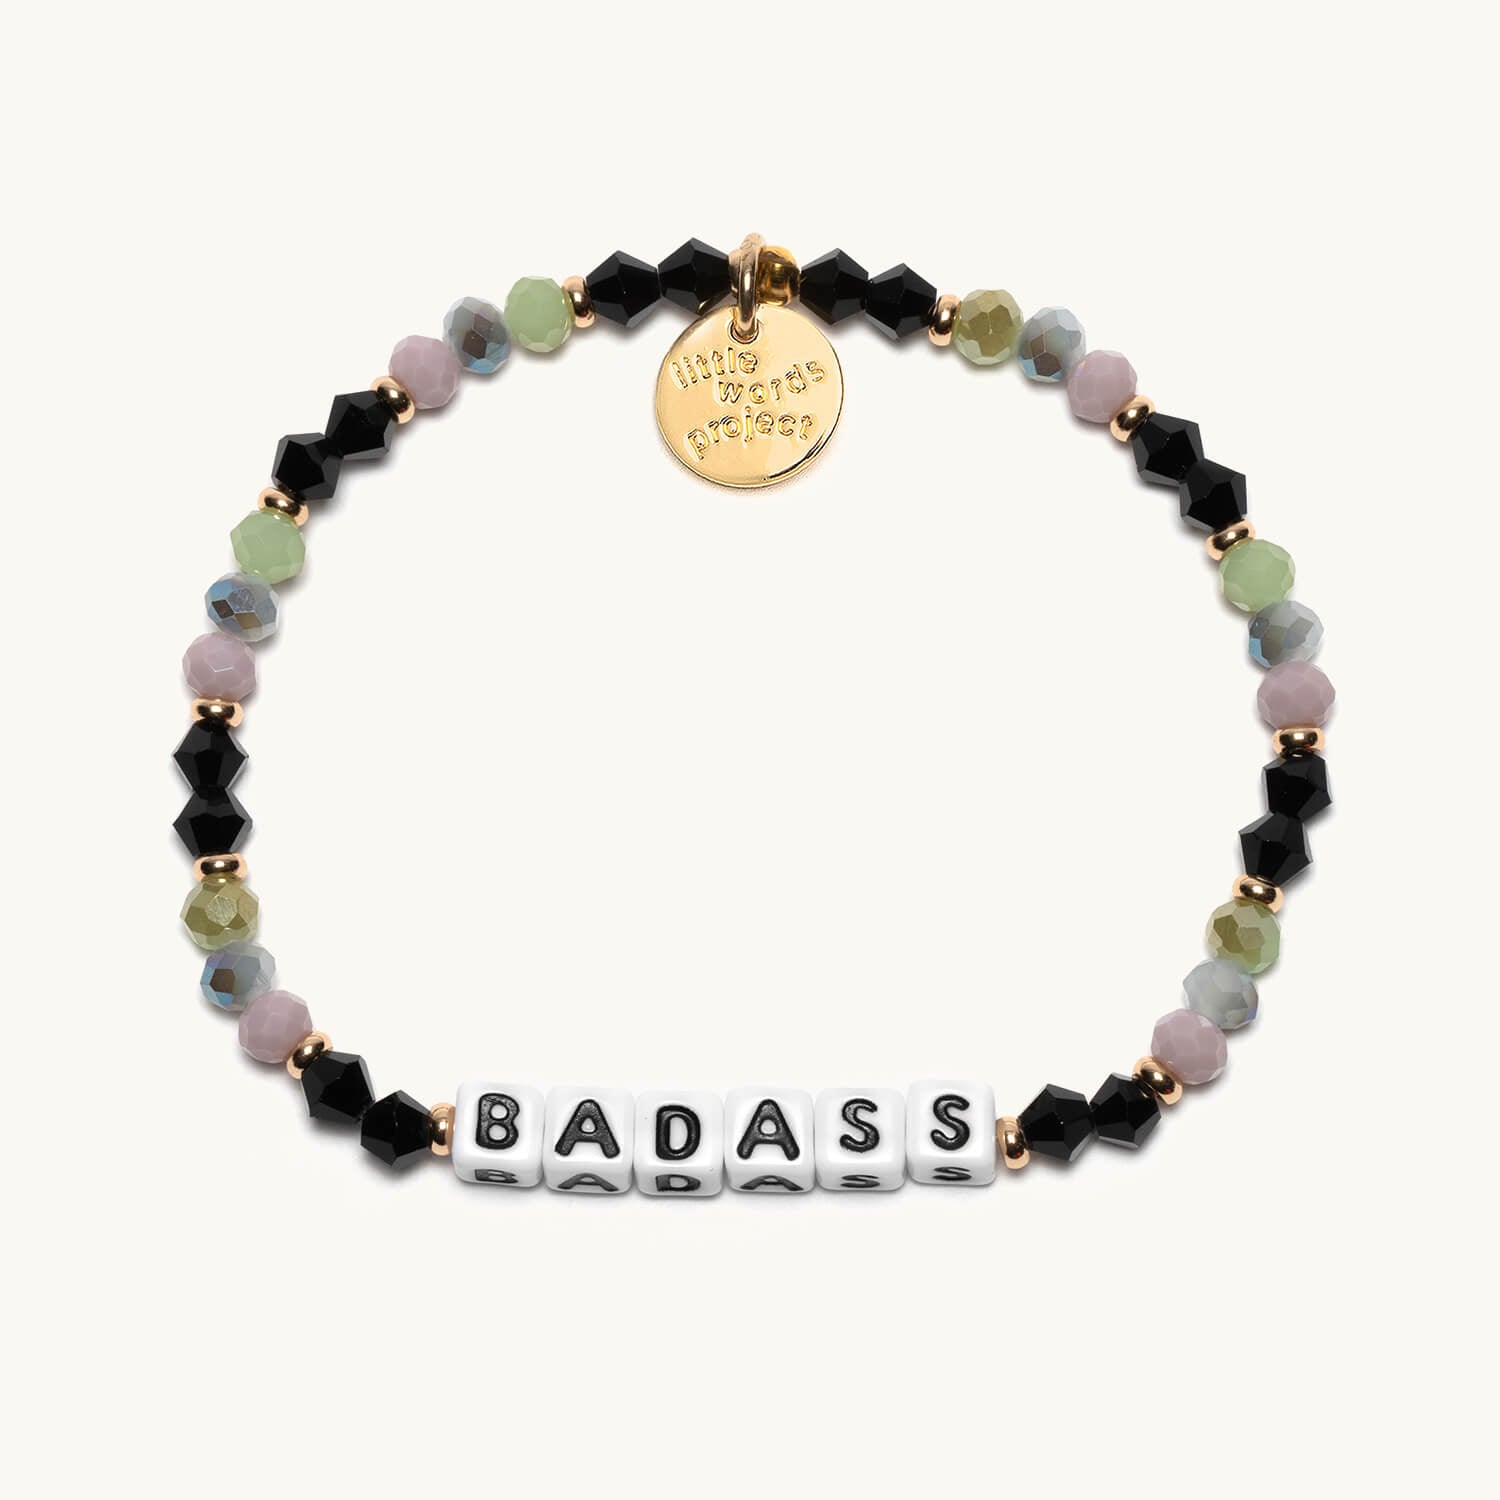 Badass- Little Words Project Bracelet 